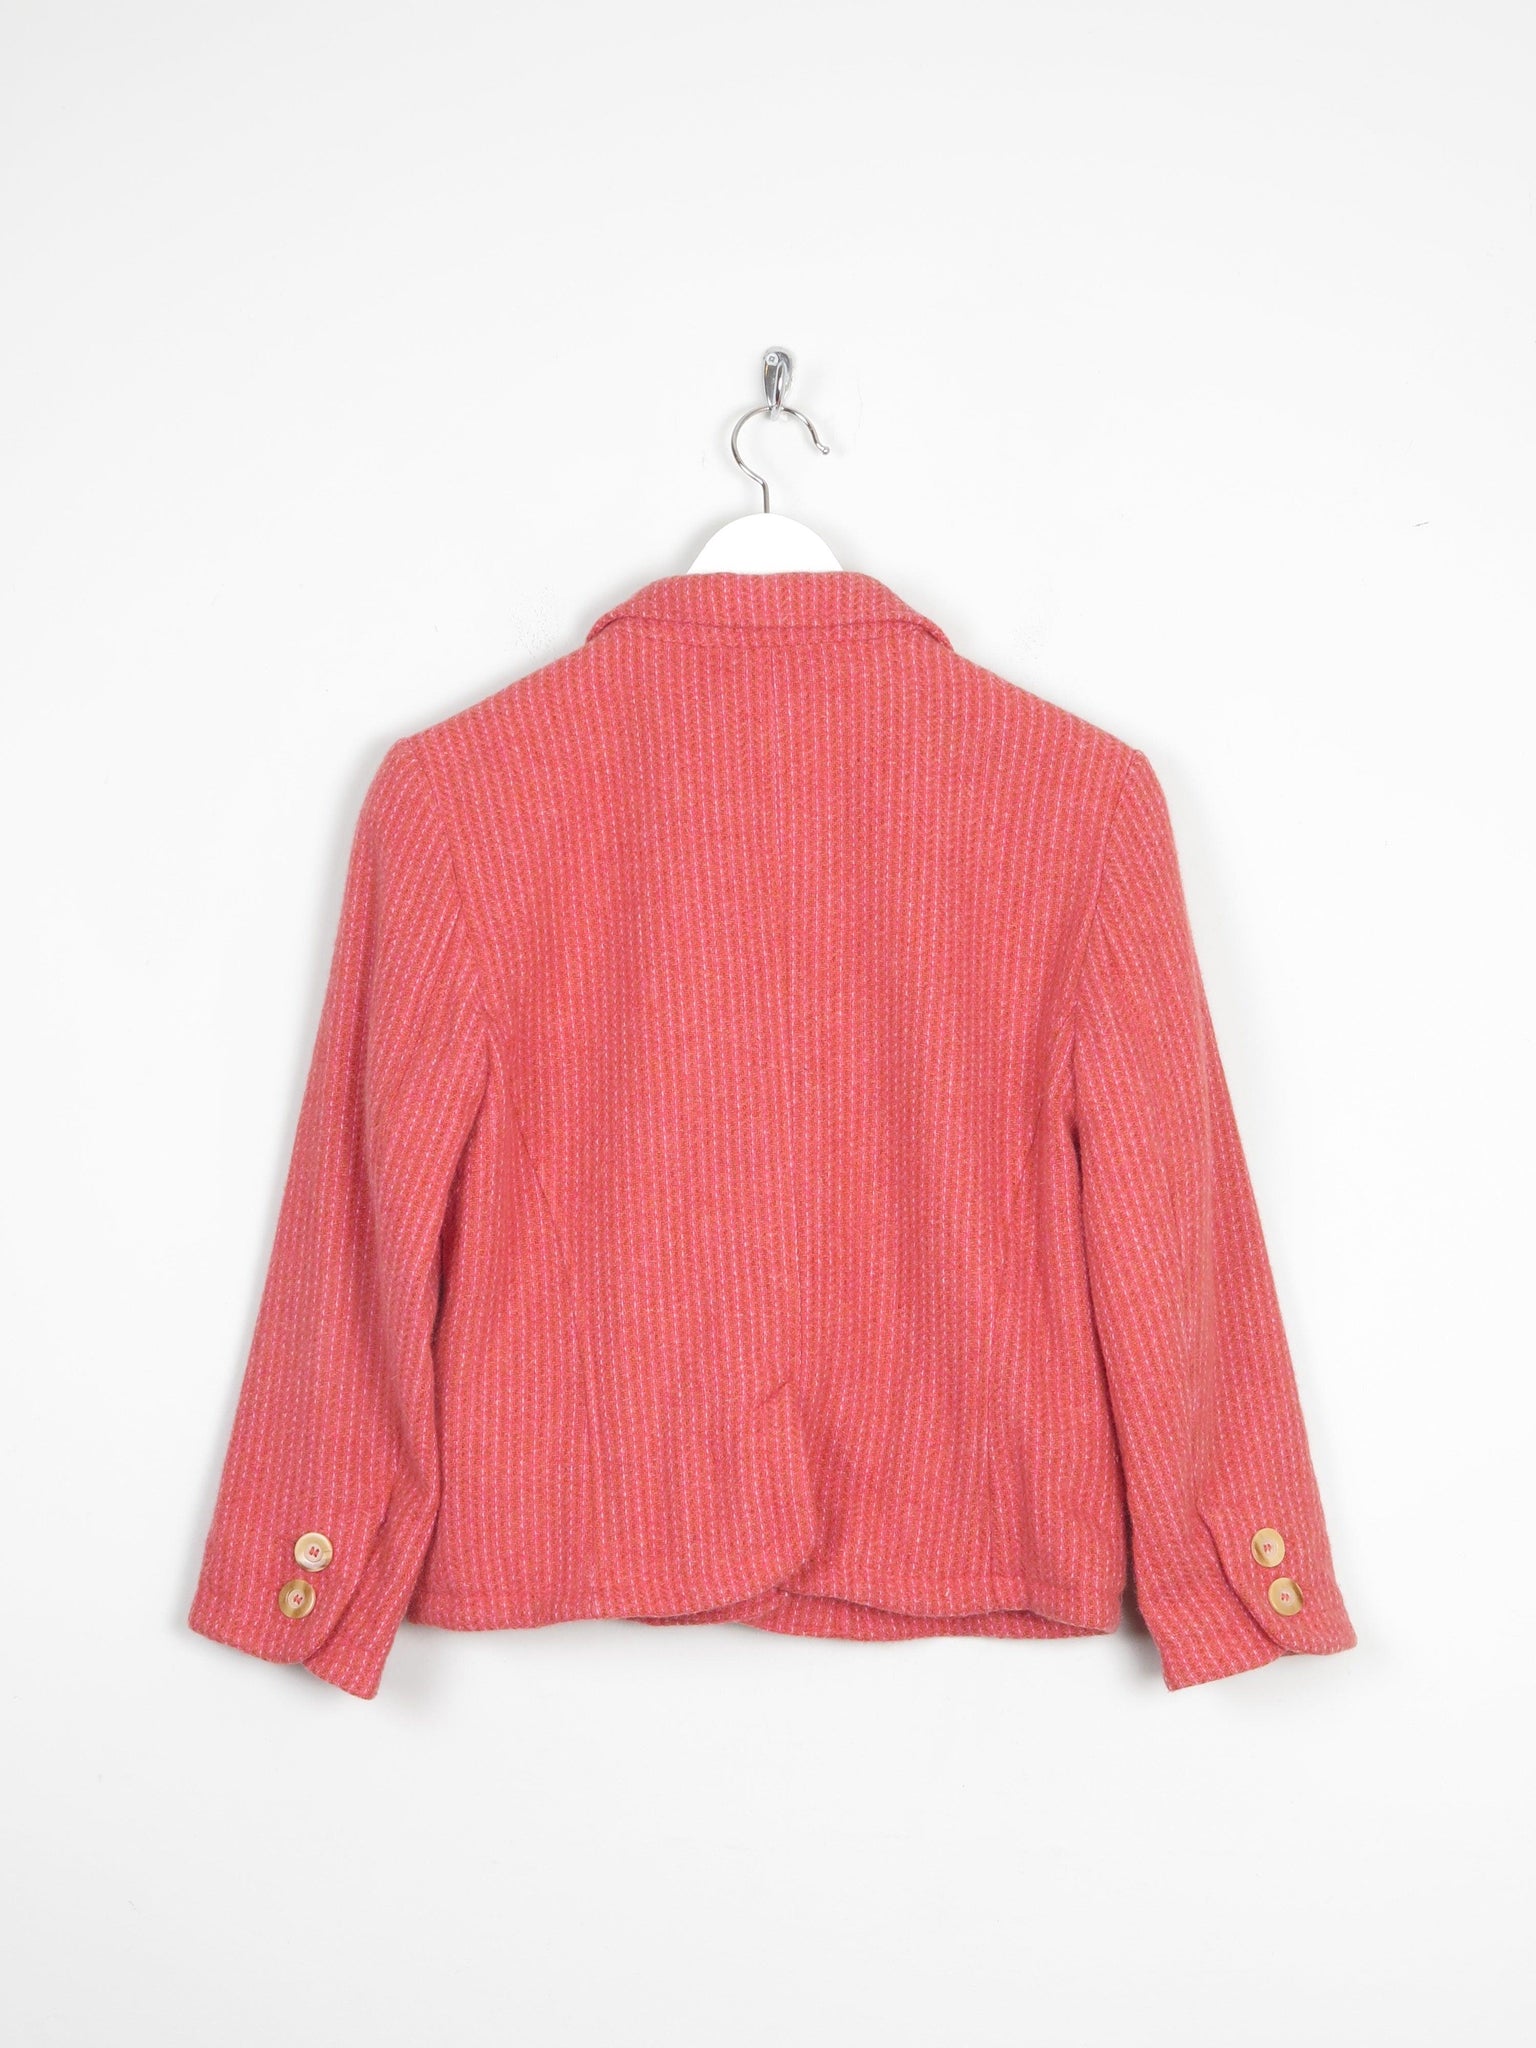 Women’s Pink Tweed Cropped Vintage Style Jacket S 8/10 - The Harlequin